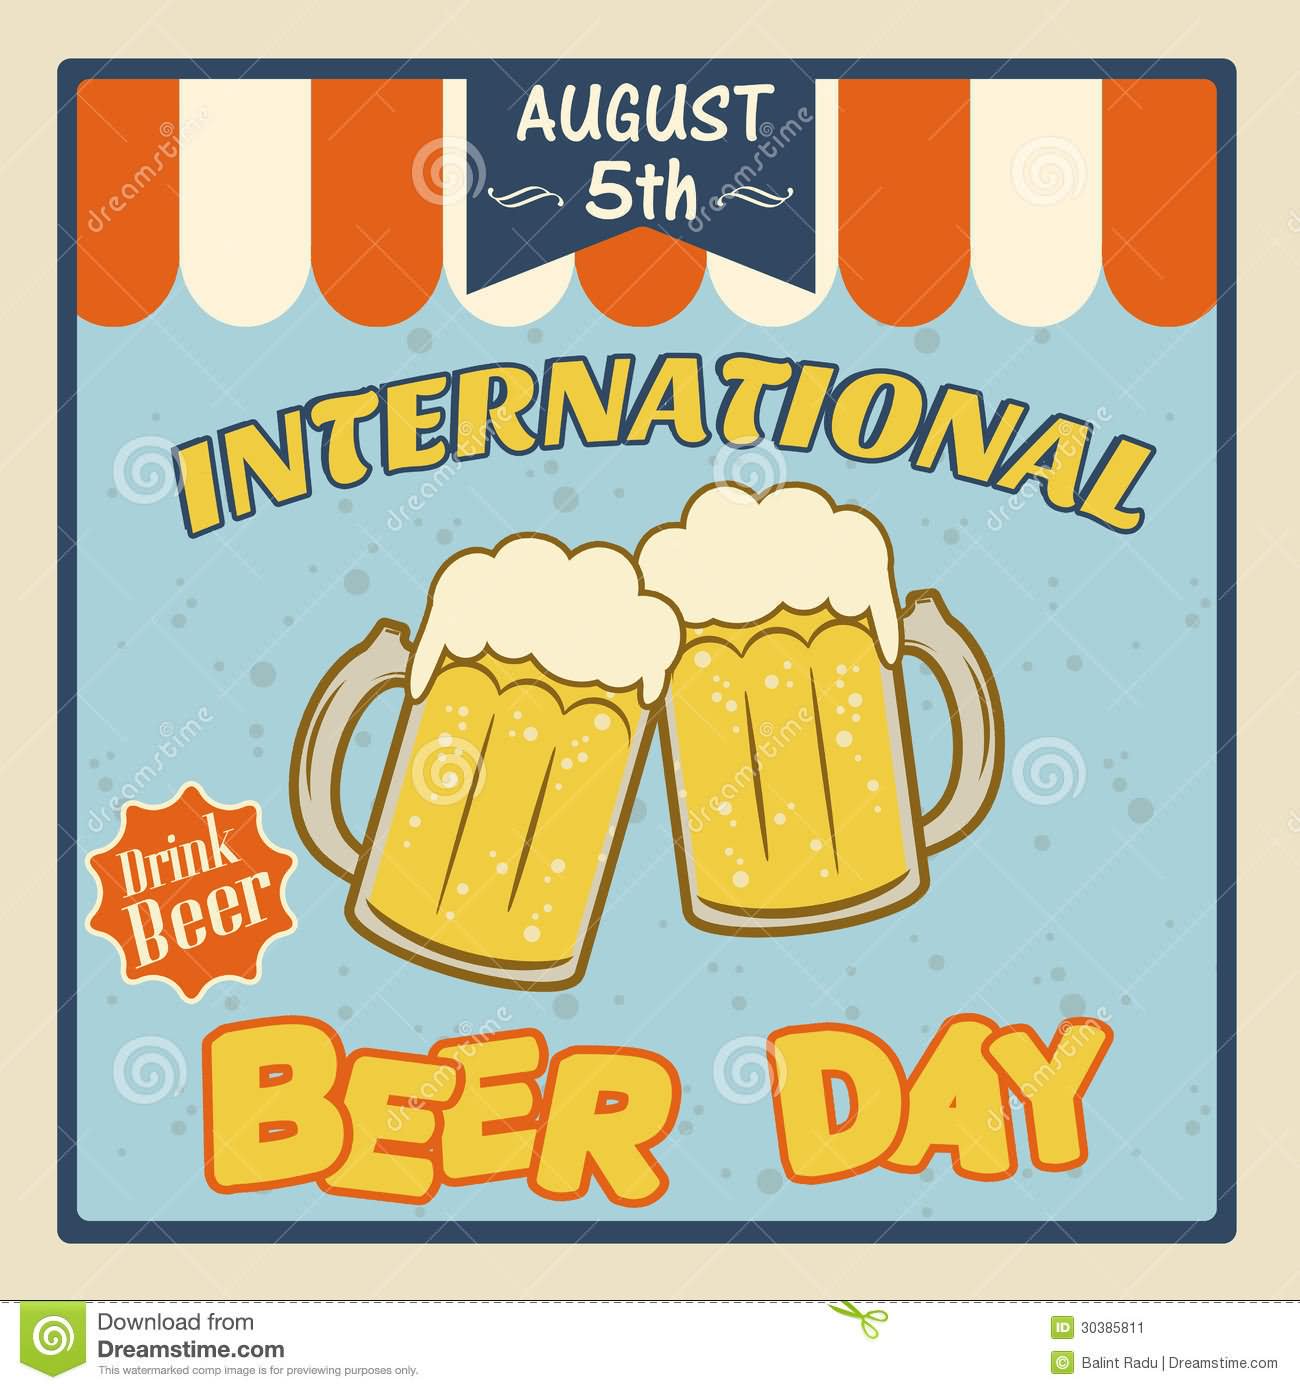 August 5th International Beer Day Drink Beer Poster